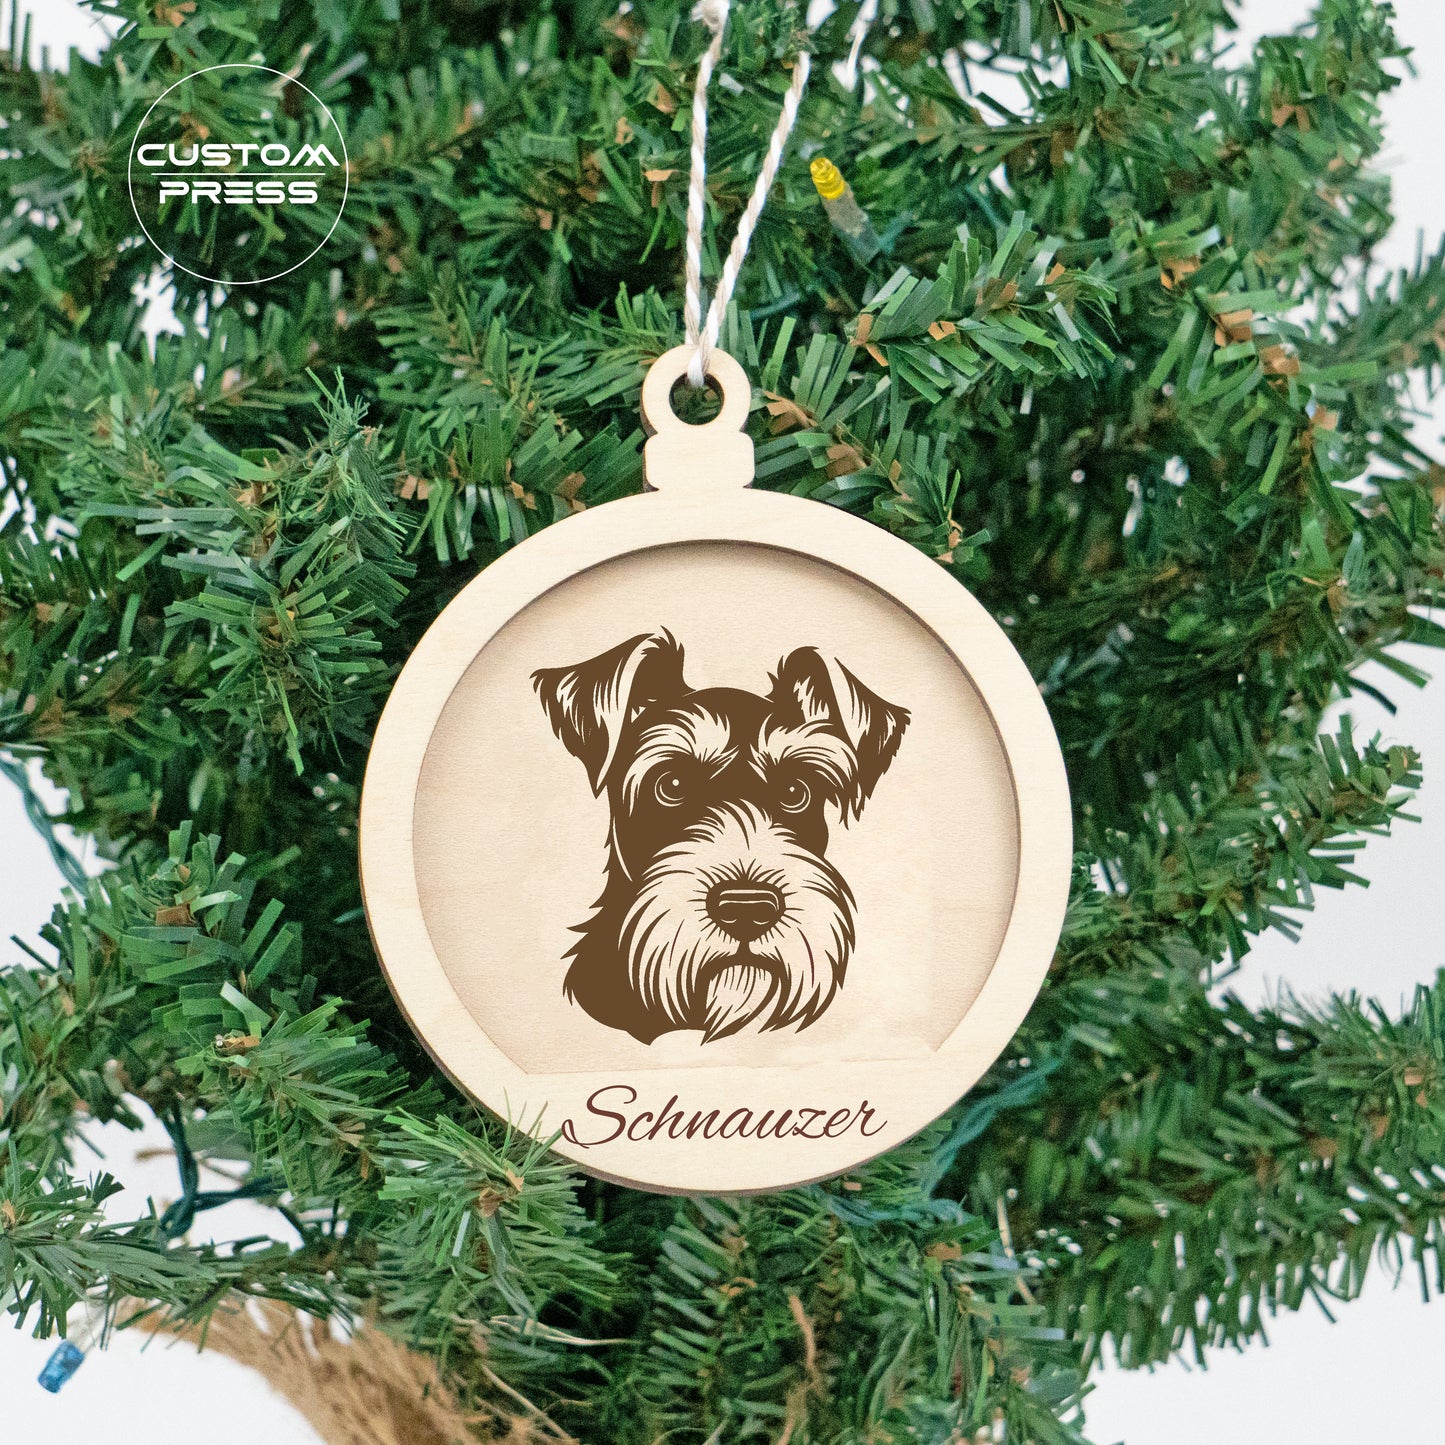 Dog Face Ornament